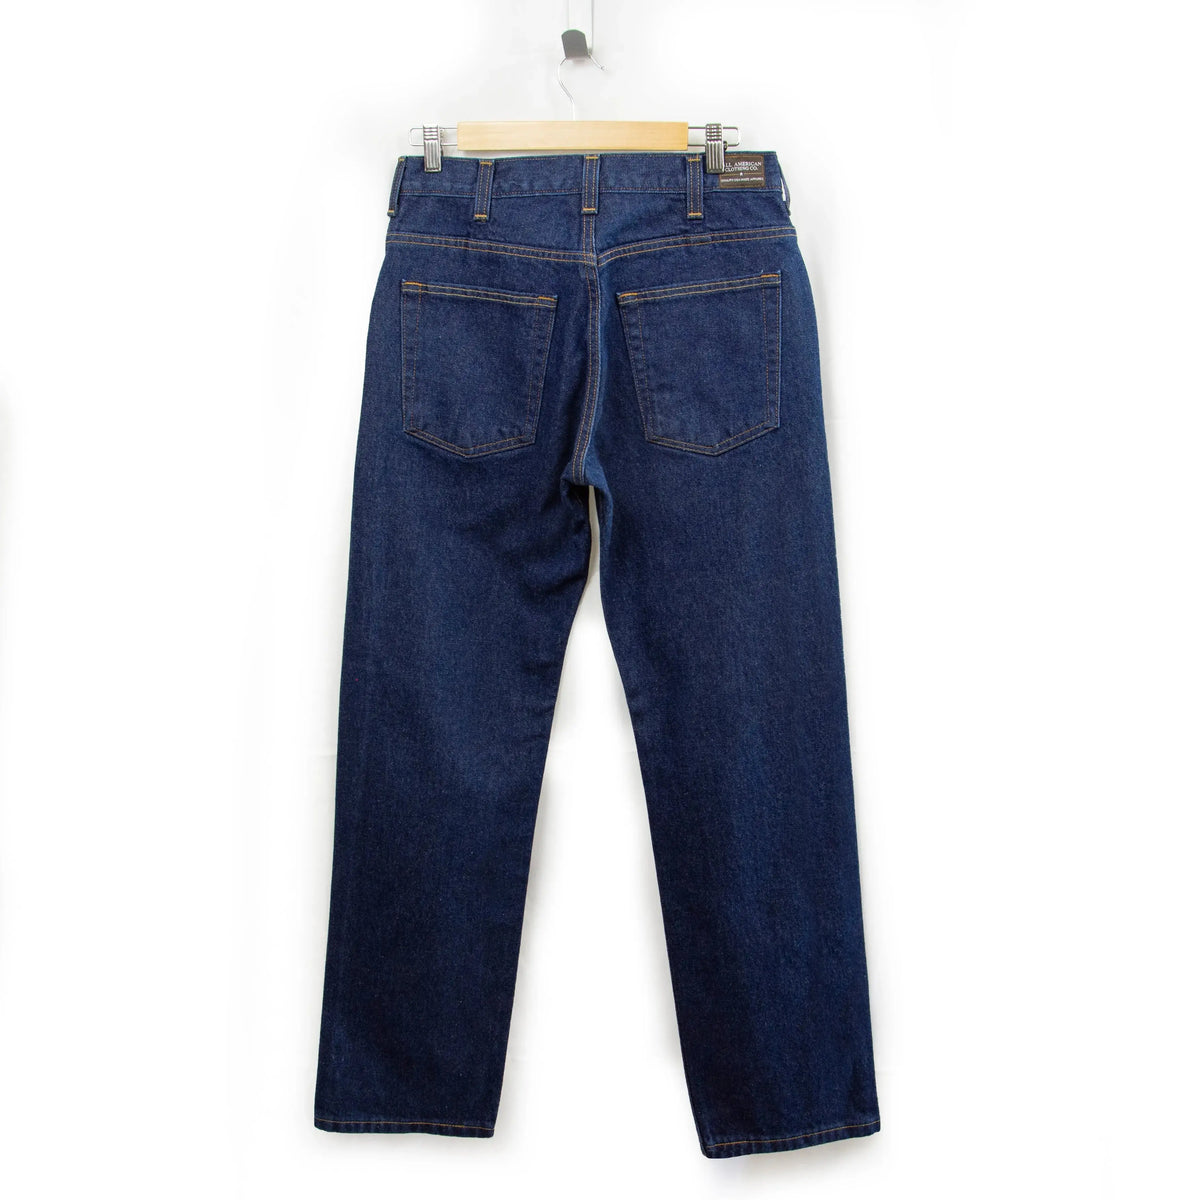 Mens Classic Fit Original Denim Jeans - at 